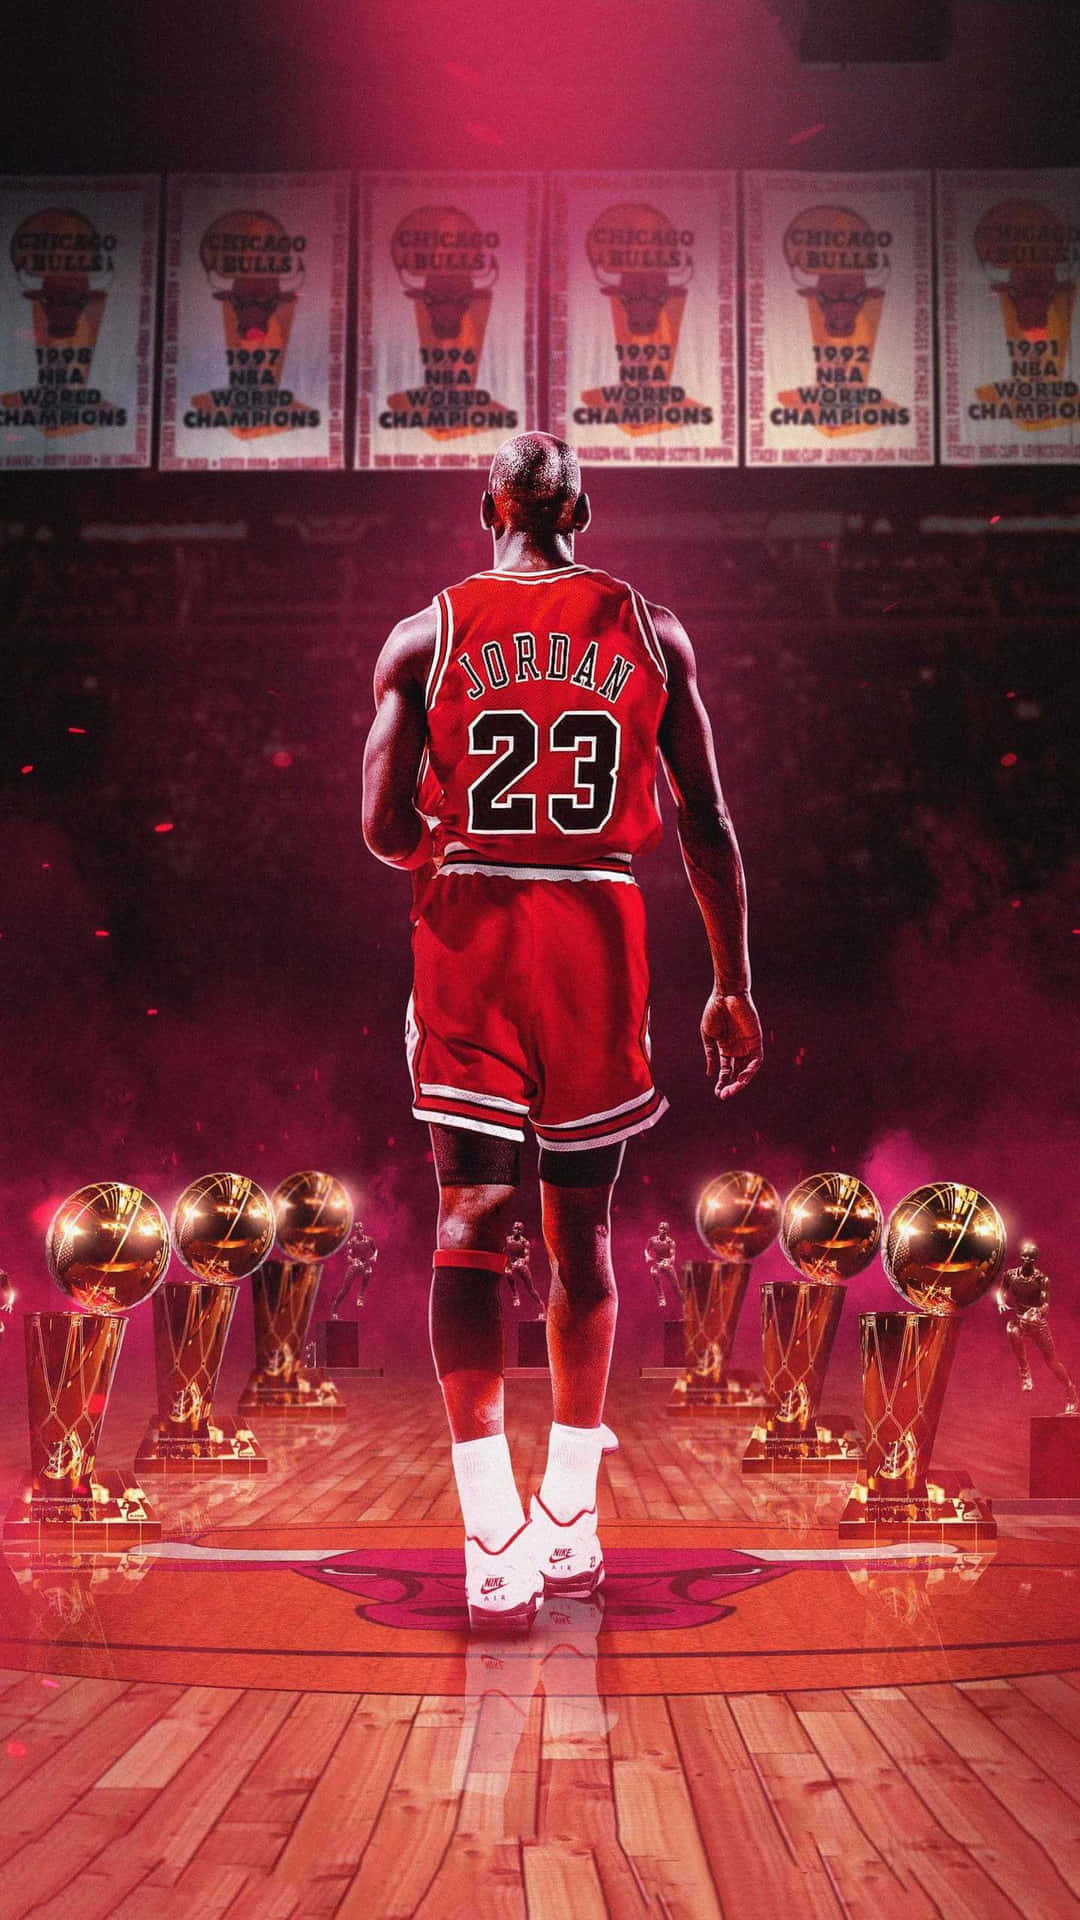 Capture the Moment with Michael Jordan’s iPhone Wallpaper